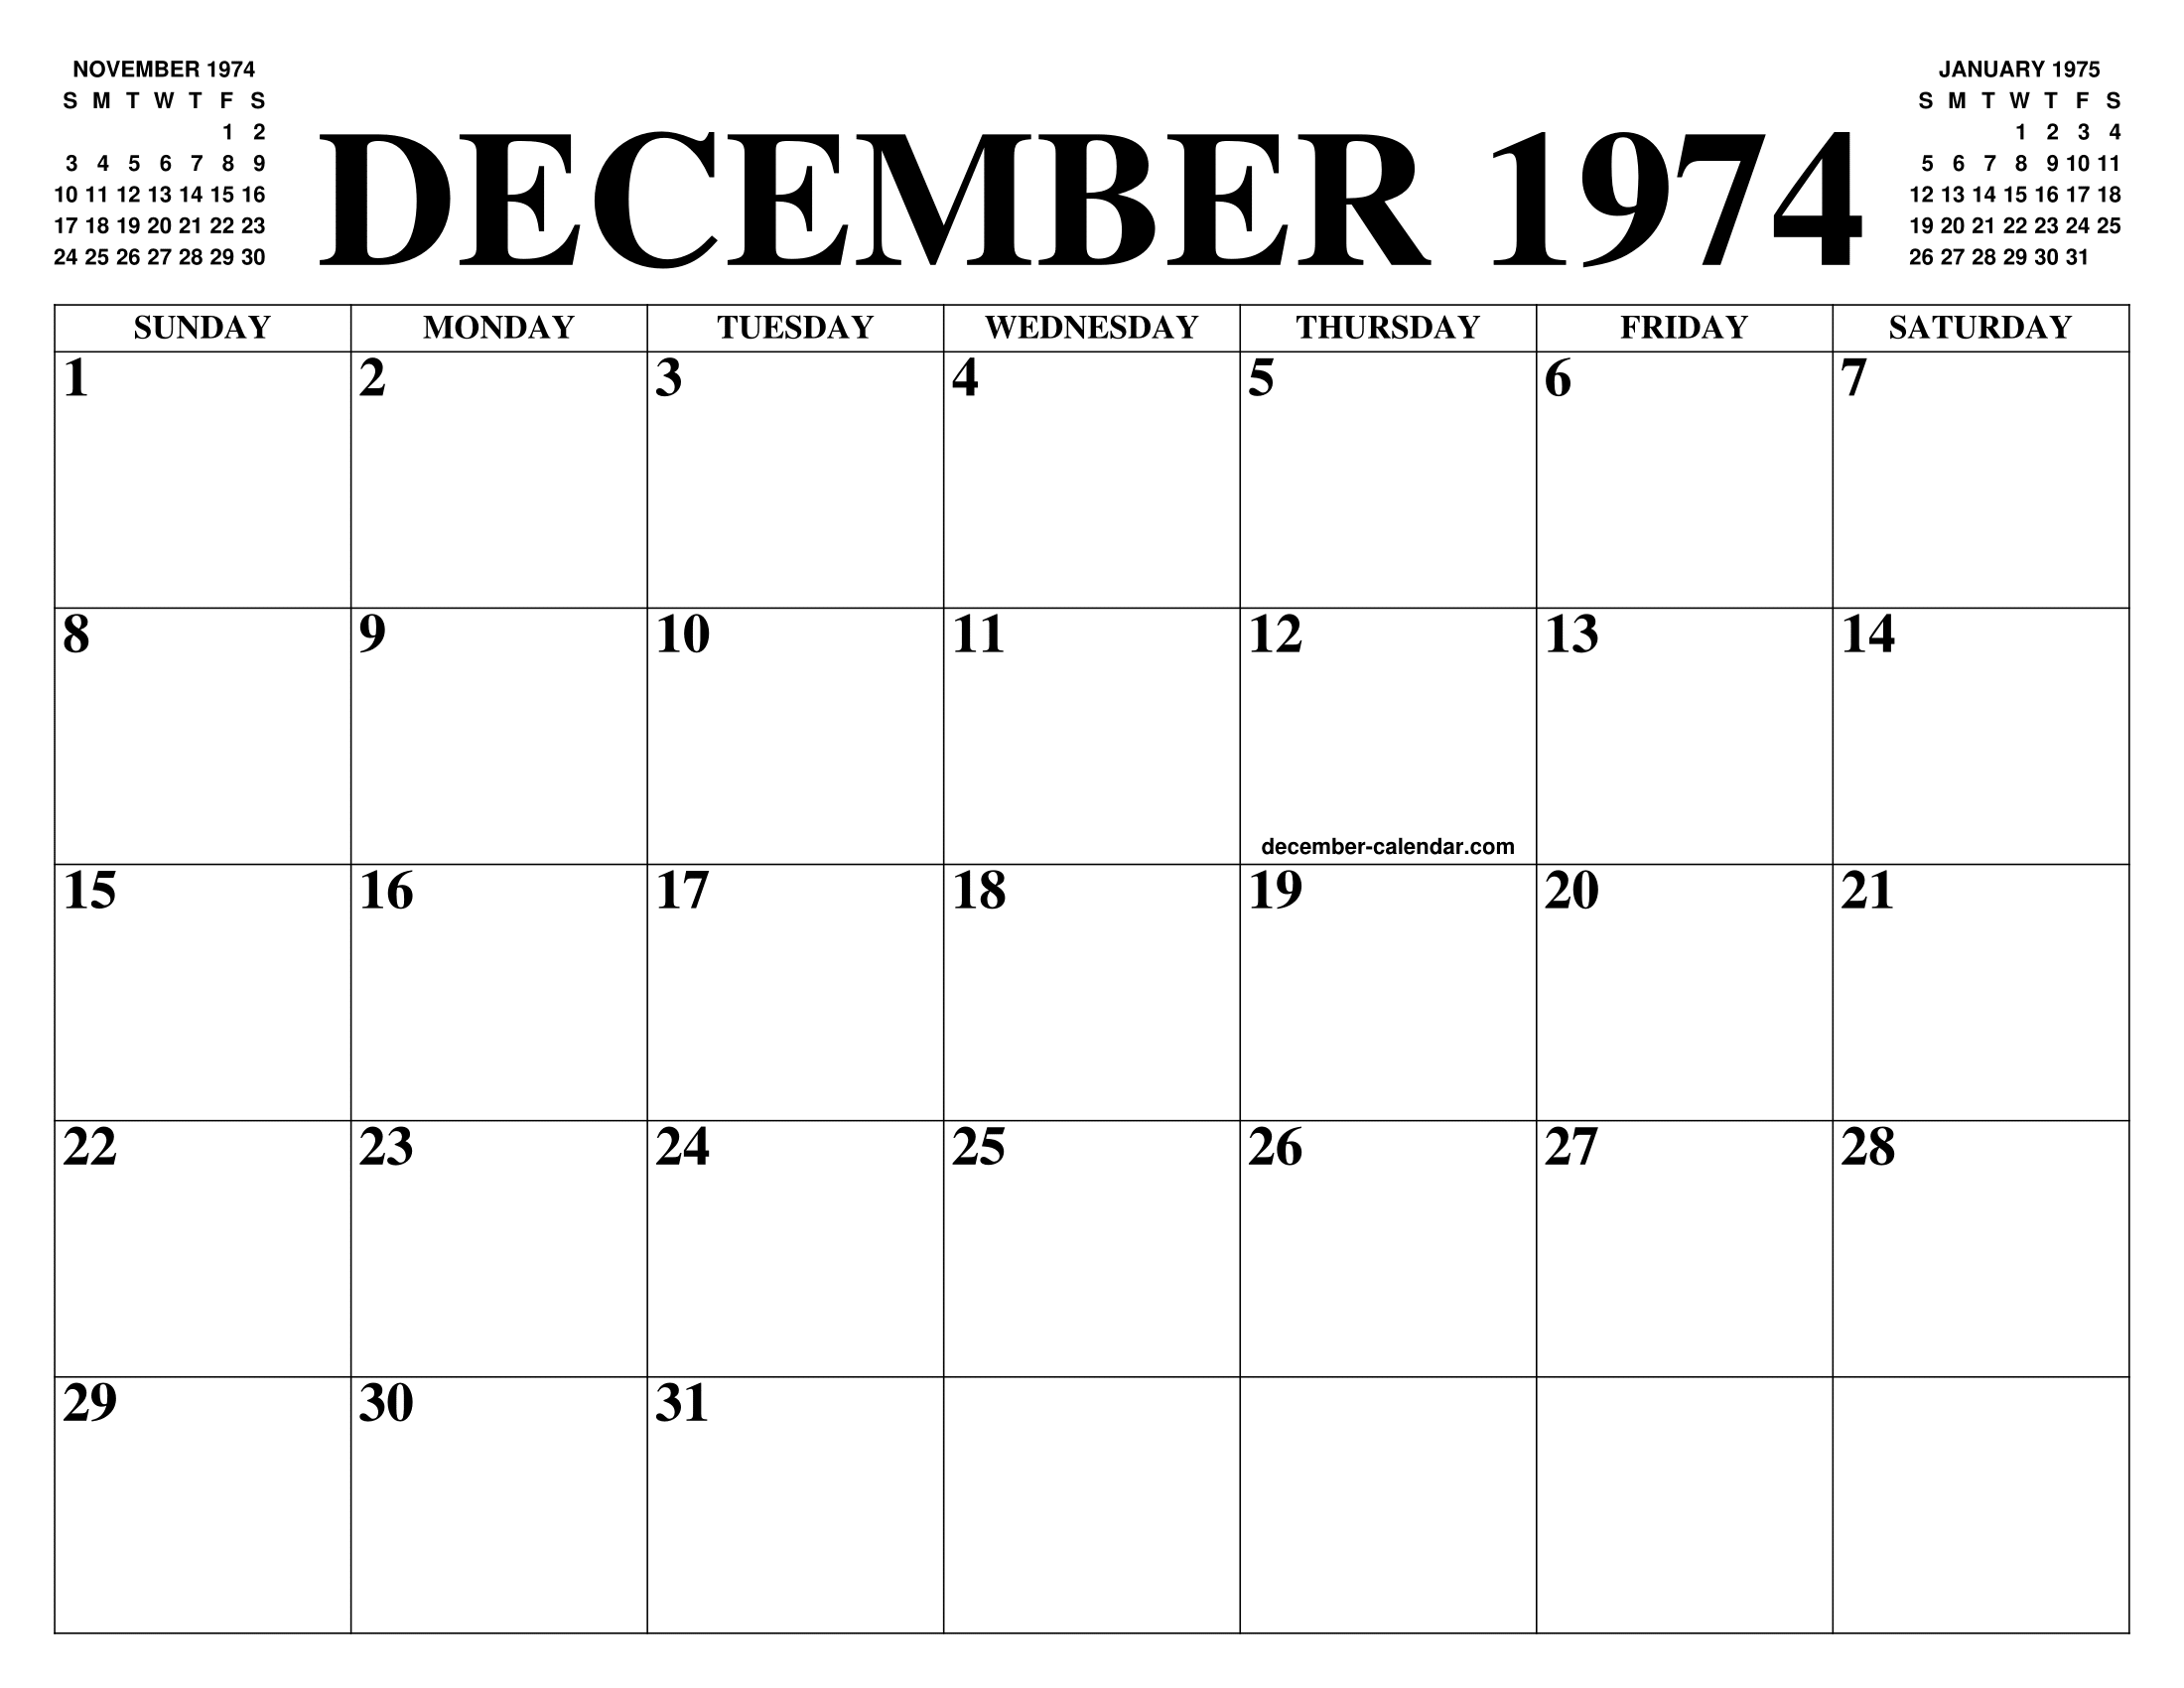 DECEMBER 1974 CALENDAR OF THE MONTH: FREE PRINTABLE DECEMBER CALENDAR